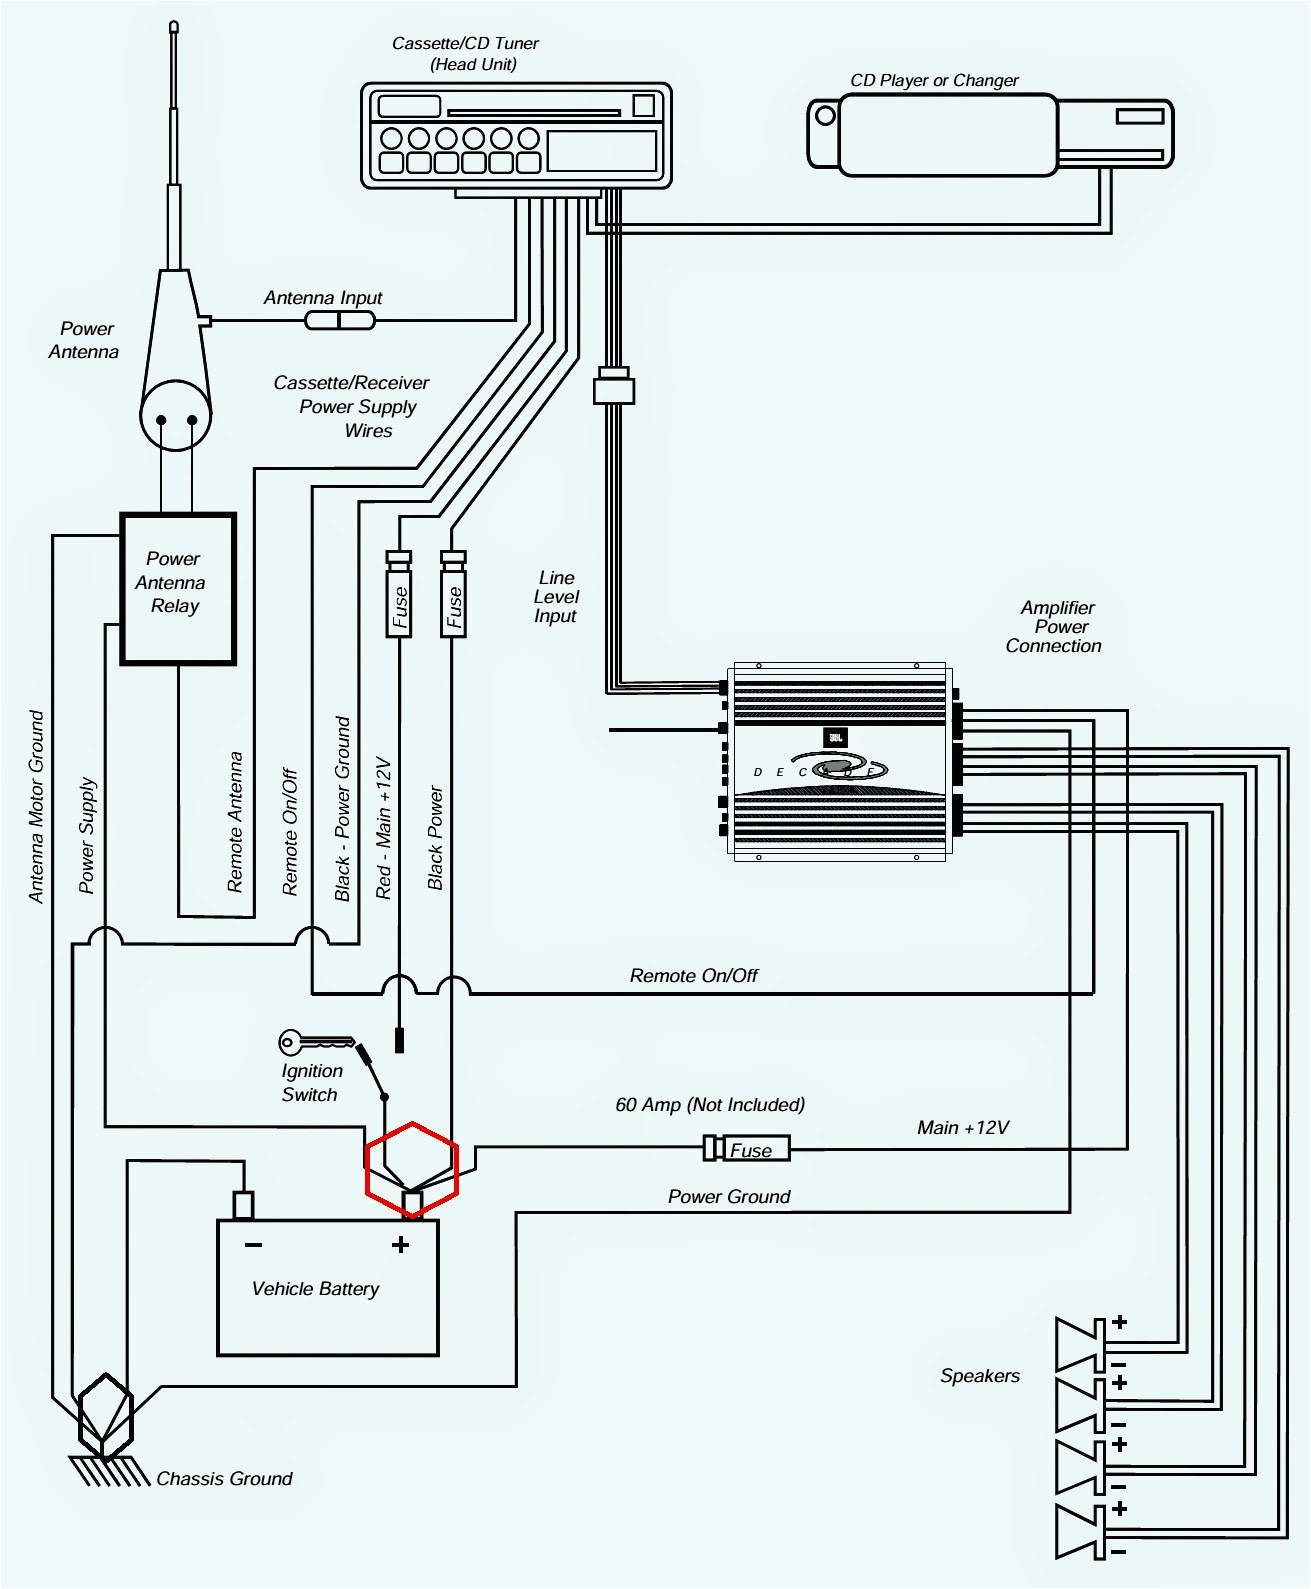 12 volt alternator wiring diagram best of citroen alternator wiring diagram